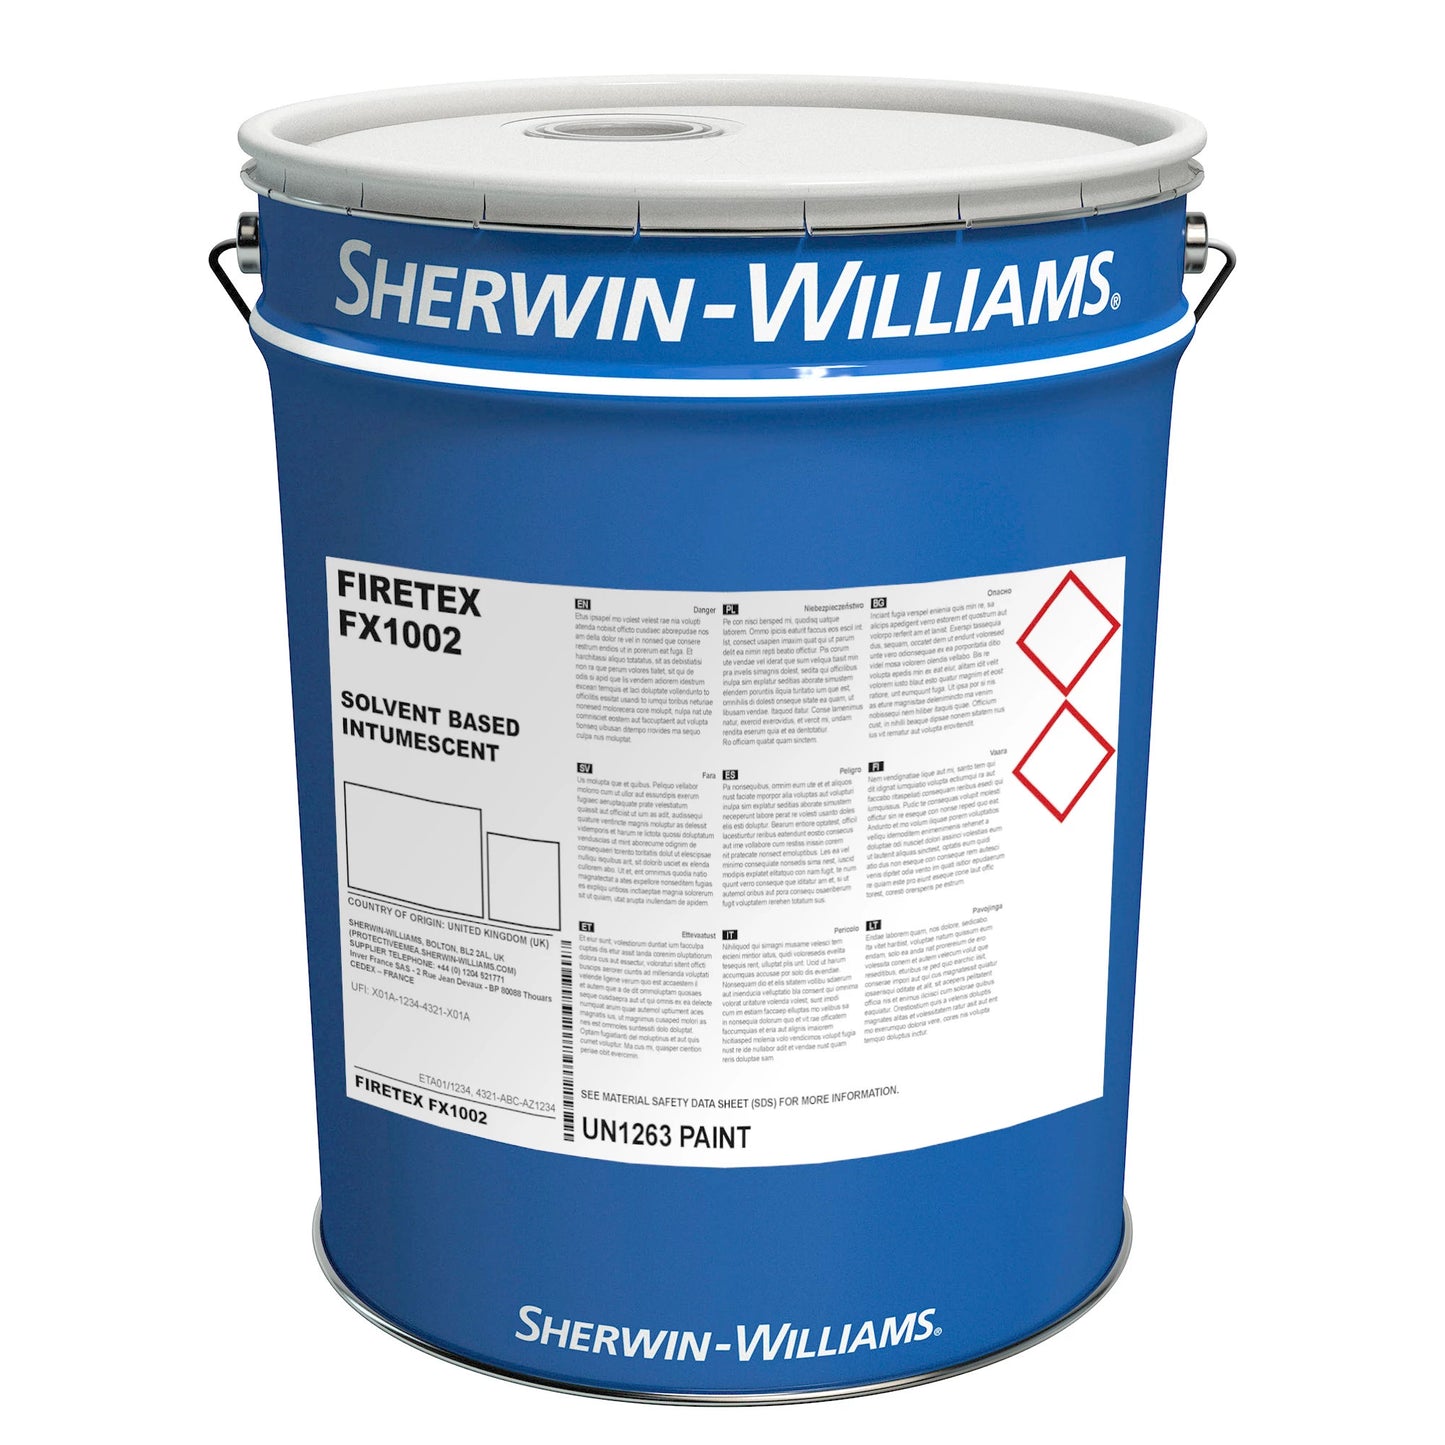 Sherwin-Williams FIRETEX FX1002